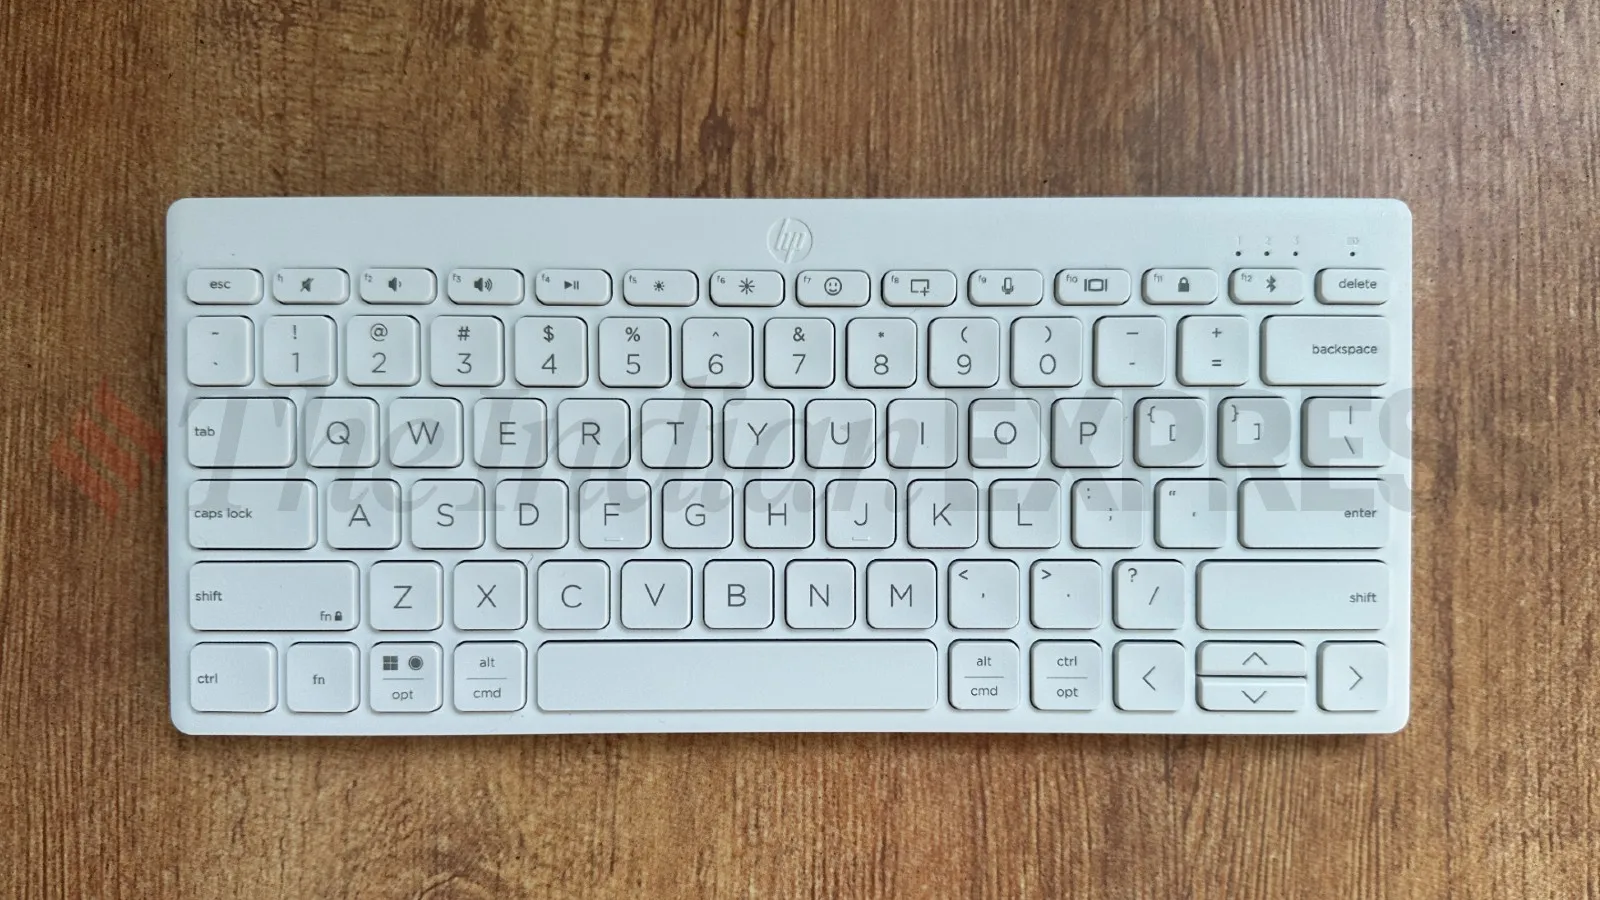 Under a Thousand: Hands down the best budget Bluetooth keyboard!